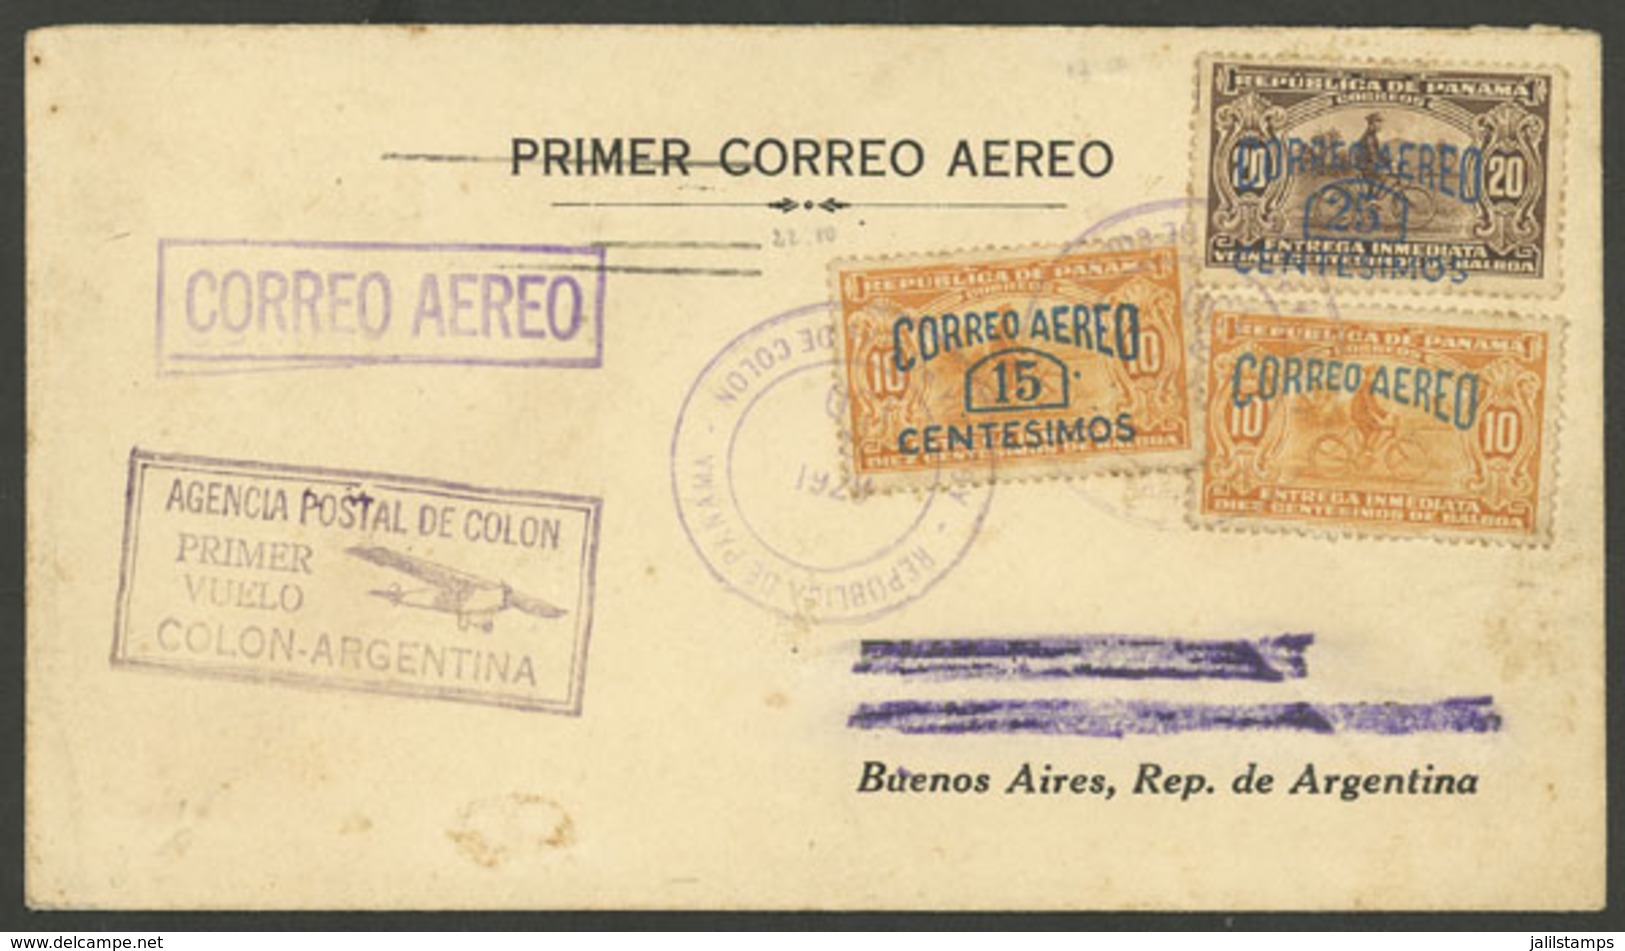 PANAMA: 8/OC/1929 Colón - Argentina, First Flight, Arrival Backstamp Of Buenos Aires 14/OC, VF - Panamá